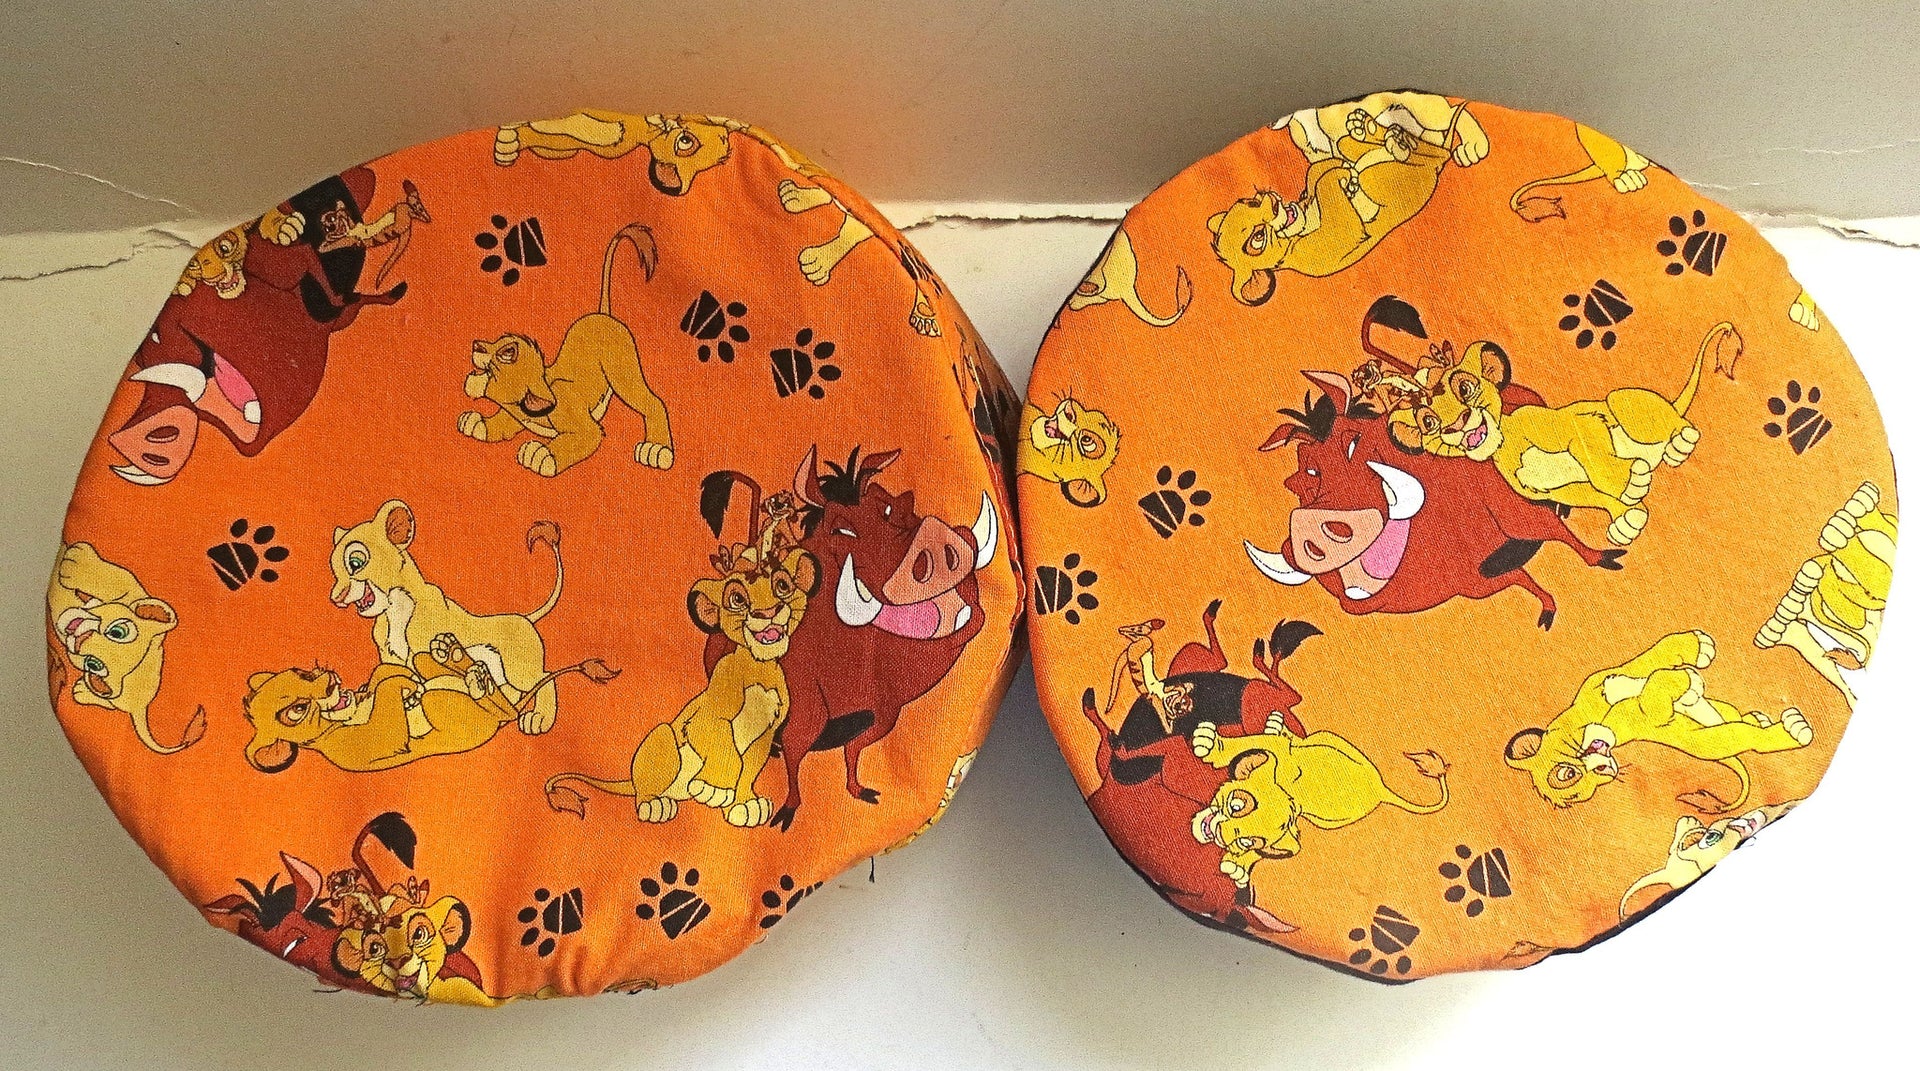 famous characters bucharian kippah preschool to adults hat style sephardic yarmulkes